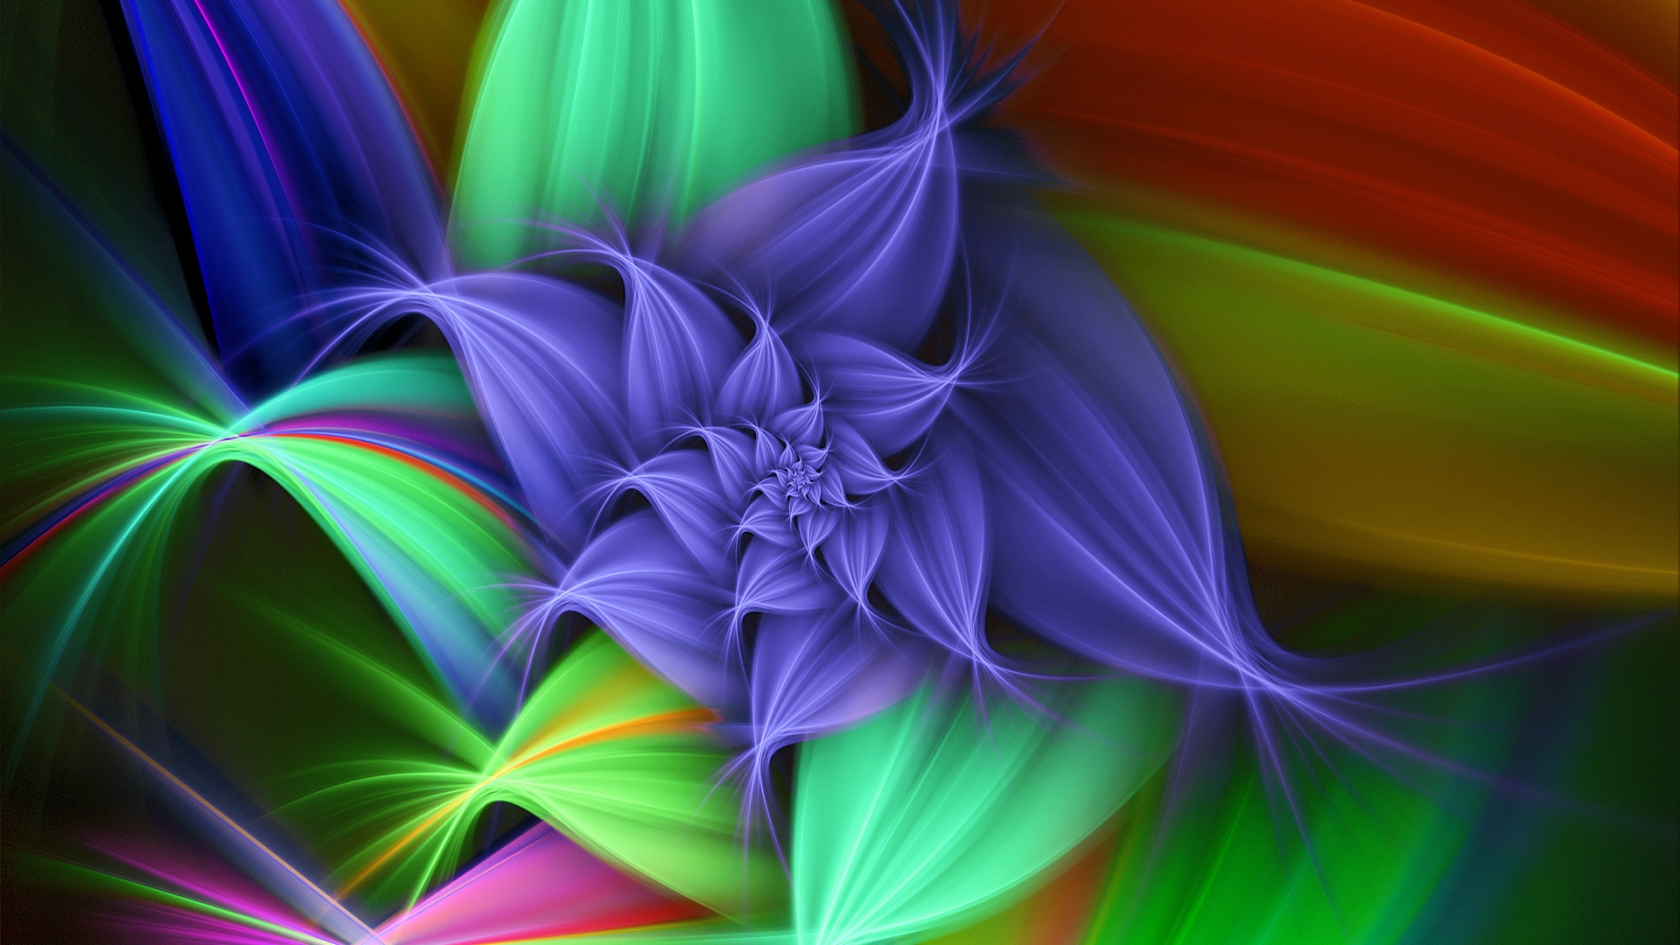 Colourful Flower for 1680 x 945 HDTV resolution